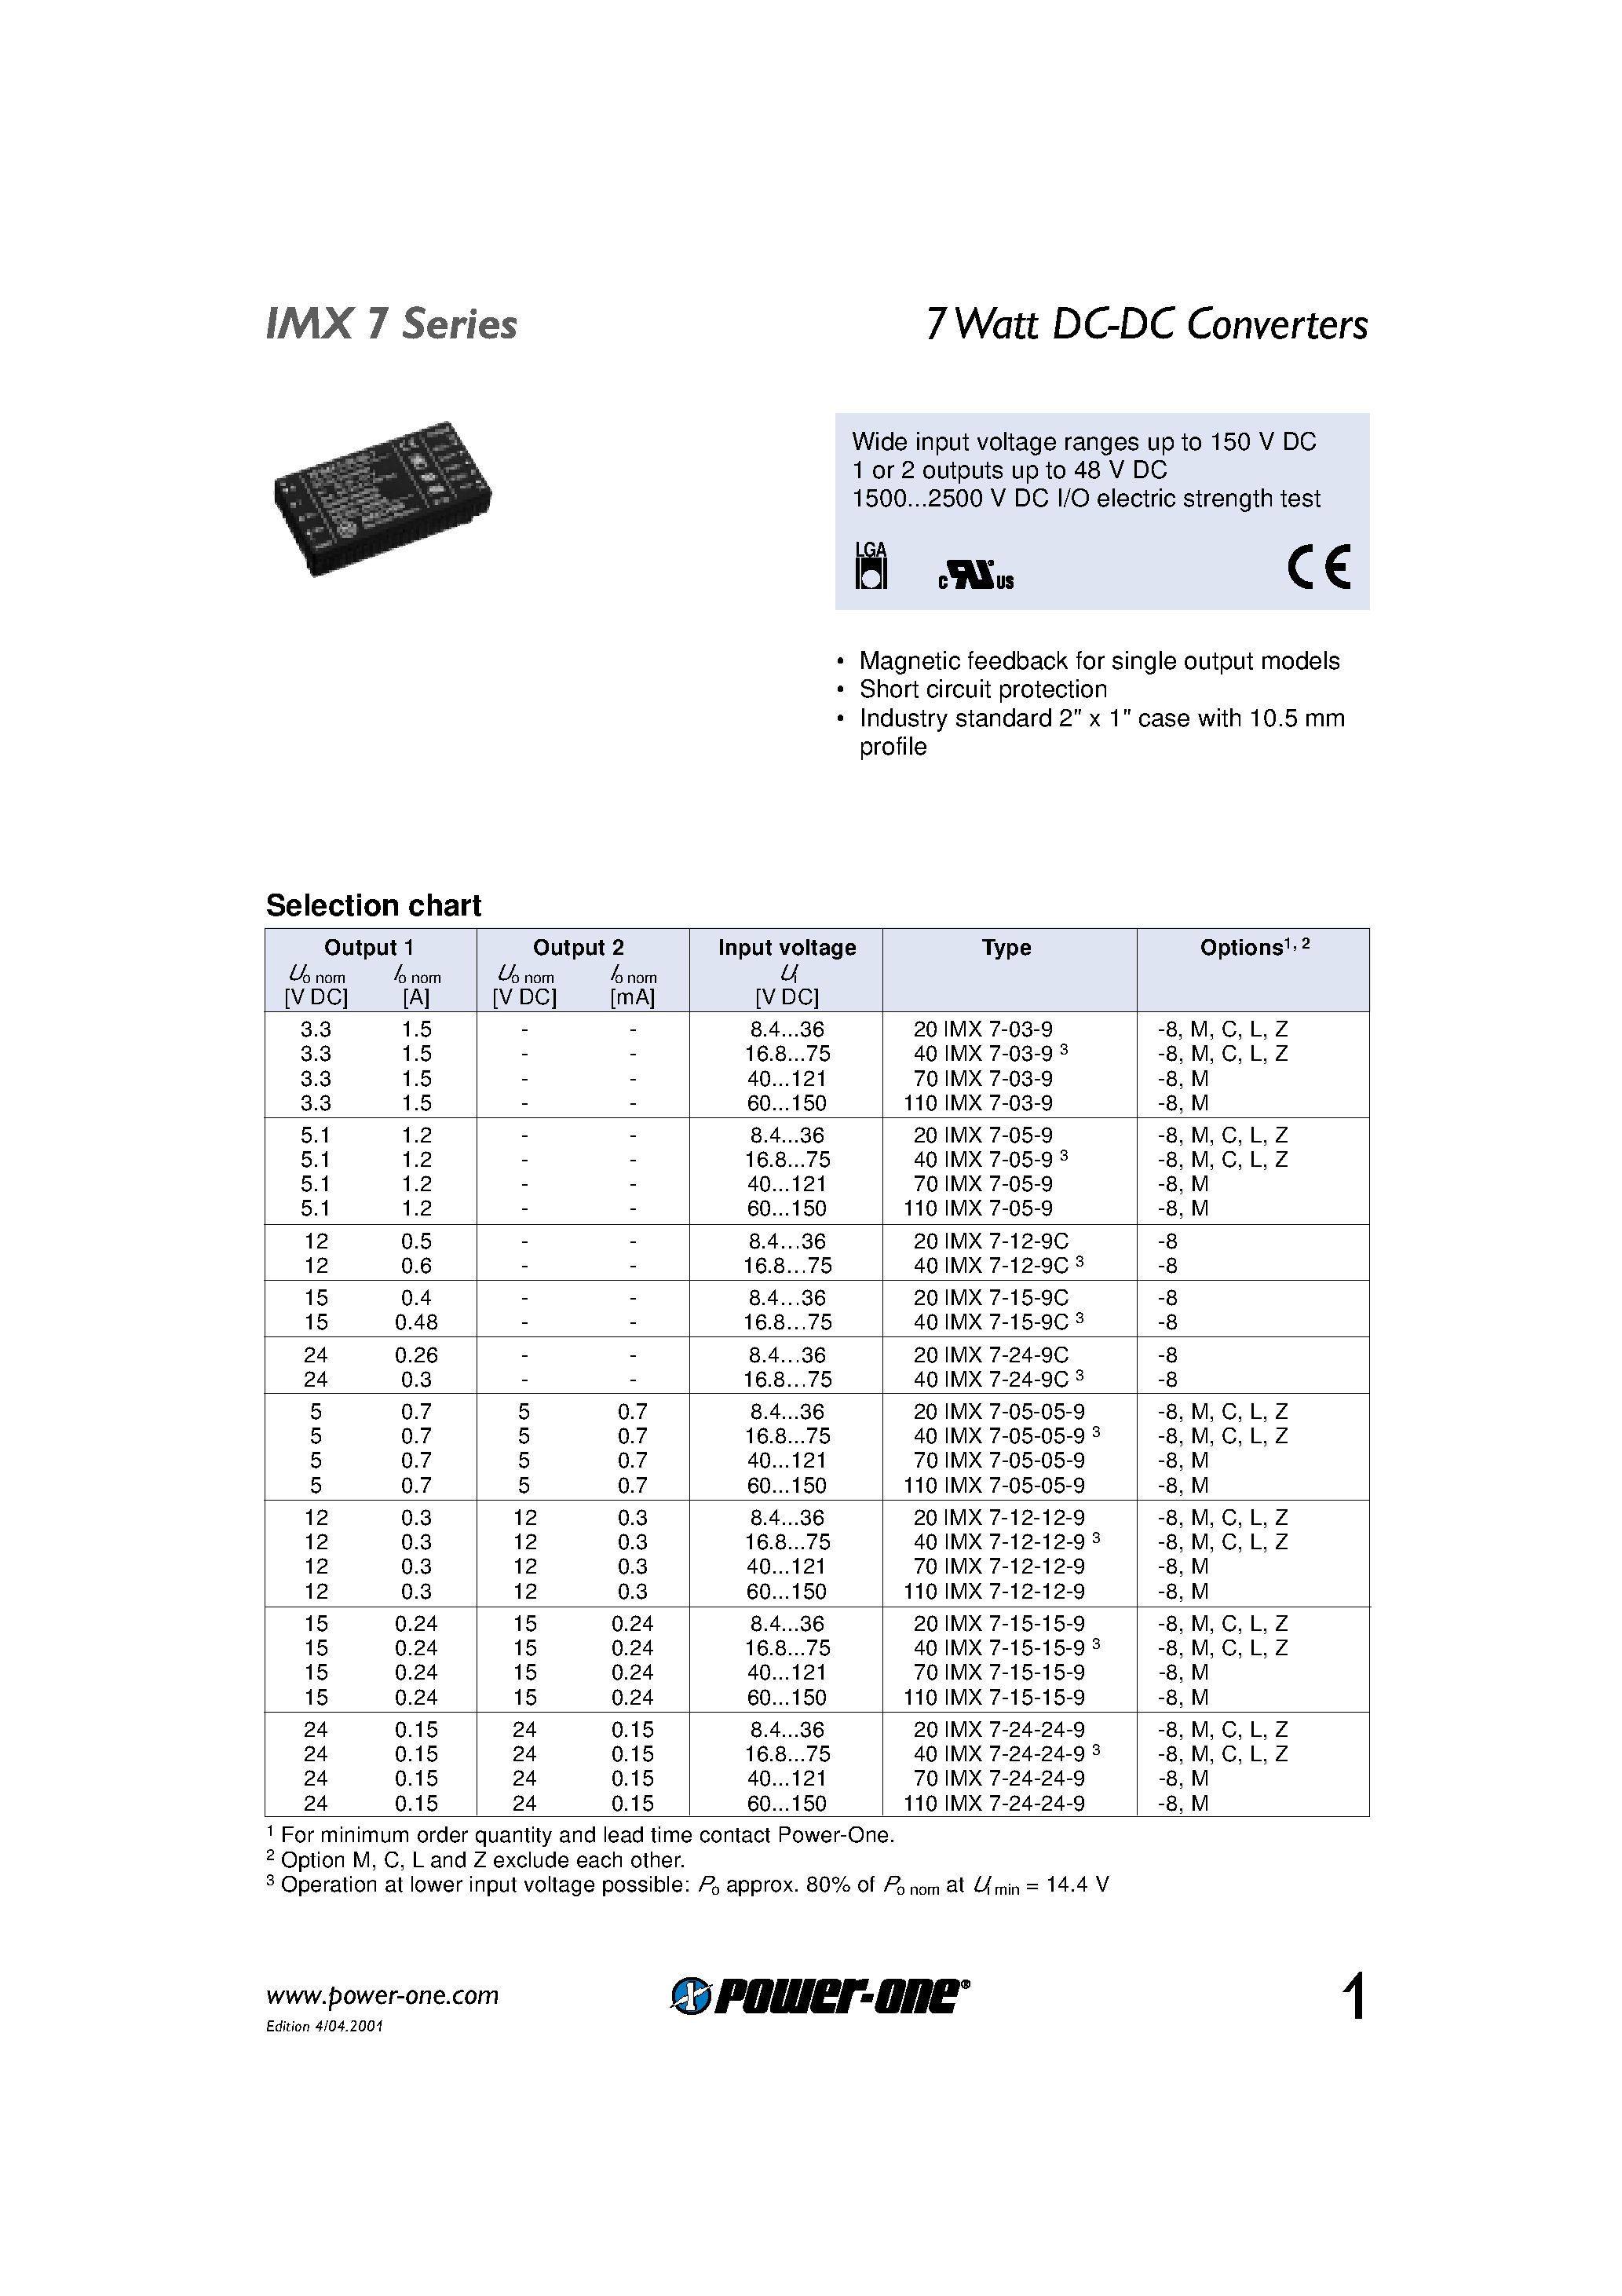 Datasheet 70IMX7-05-05-9 - 7 Watt DC-DC Converters page 1